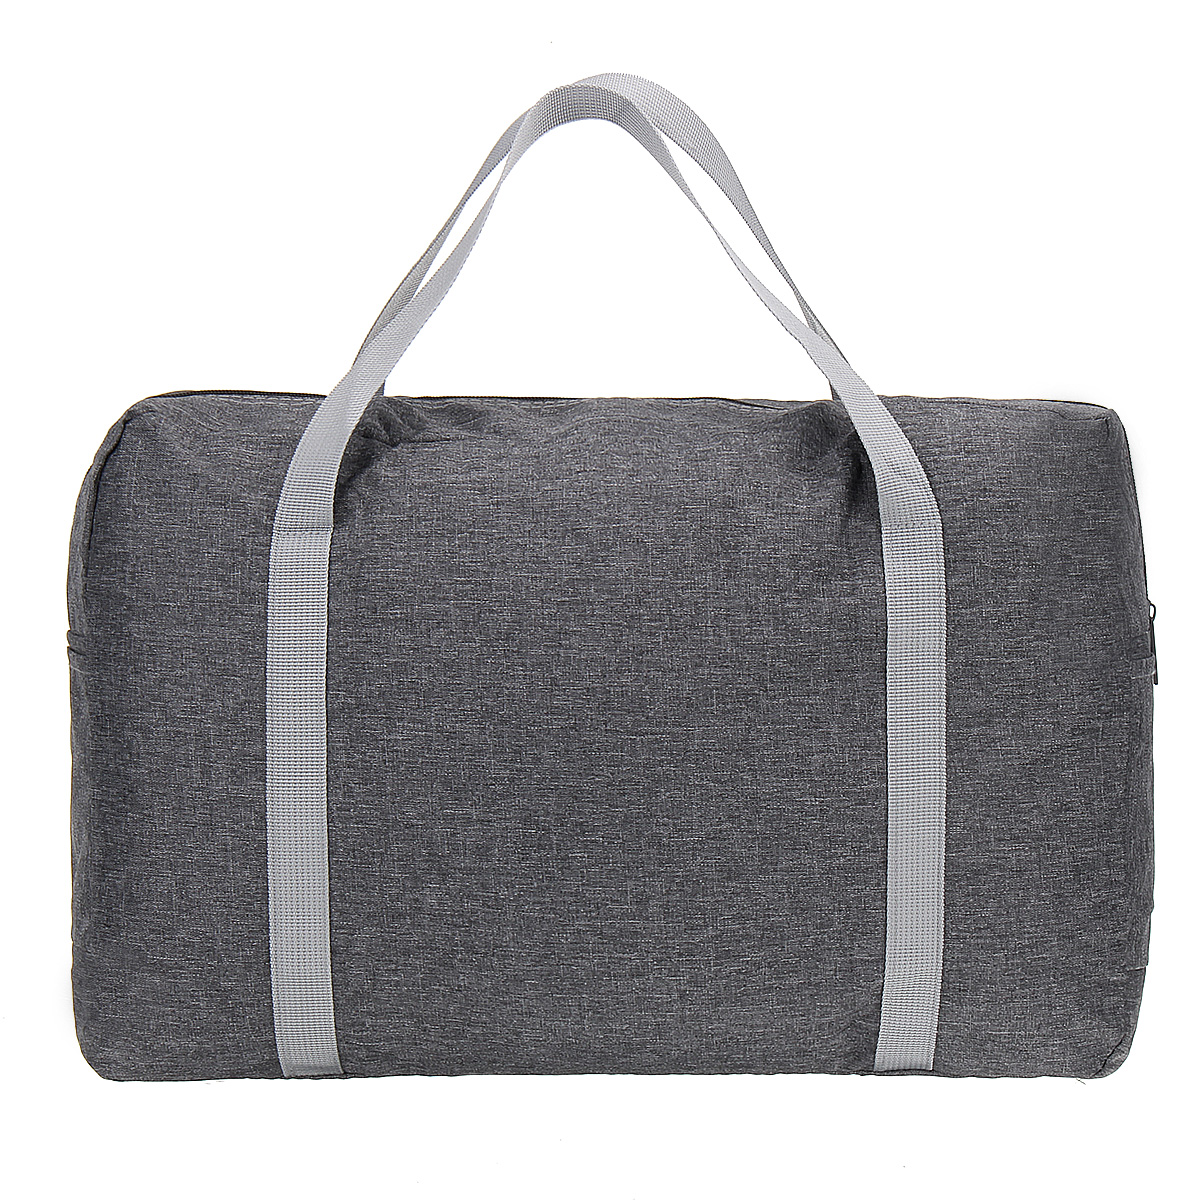 Oxford-Cloth-40x30x13cm-Foldable-Travel-Storage-Bag-Waterproof--Luggage-Bag-Hand-Shoulder-Bag-Carry--1667293-5